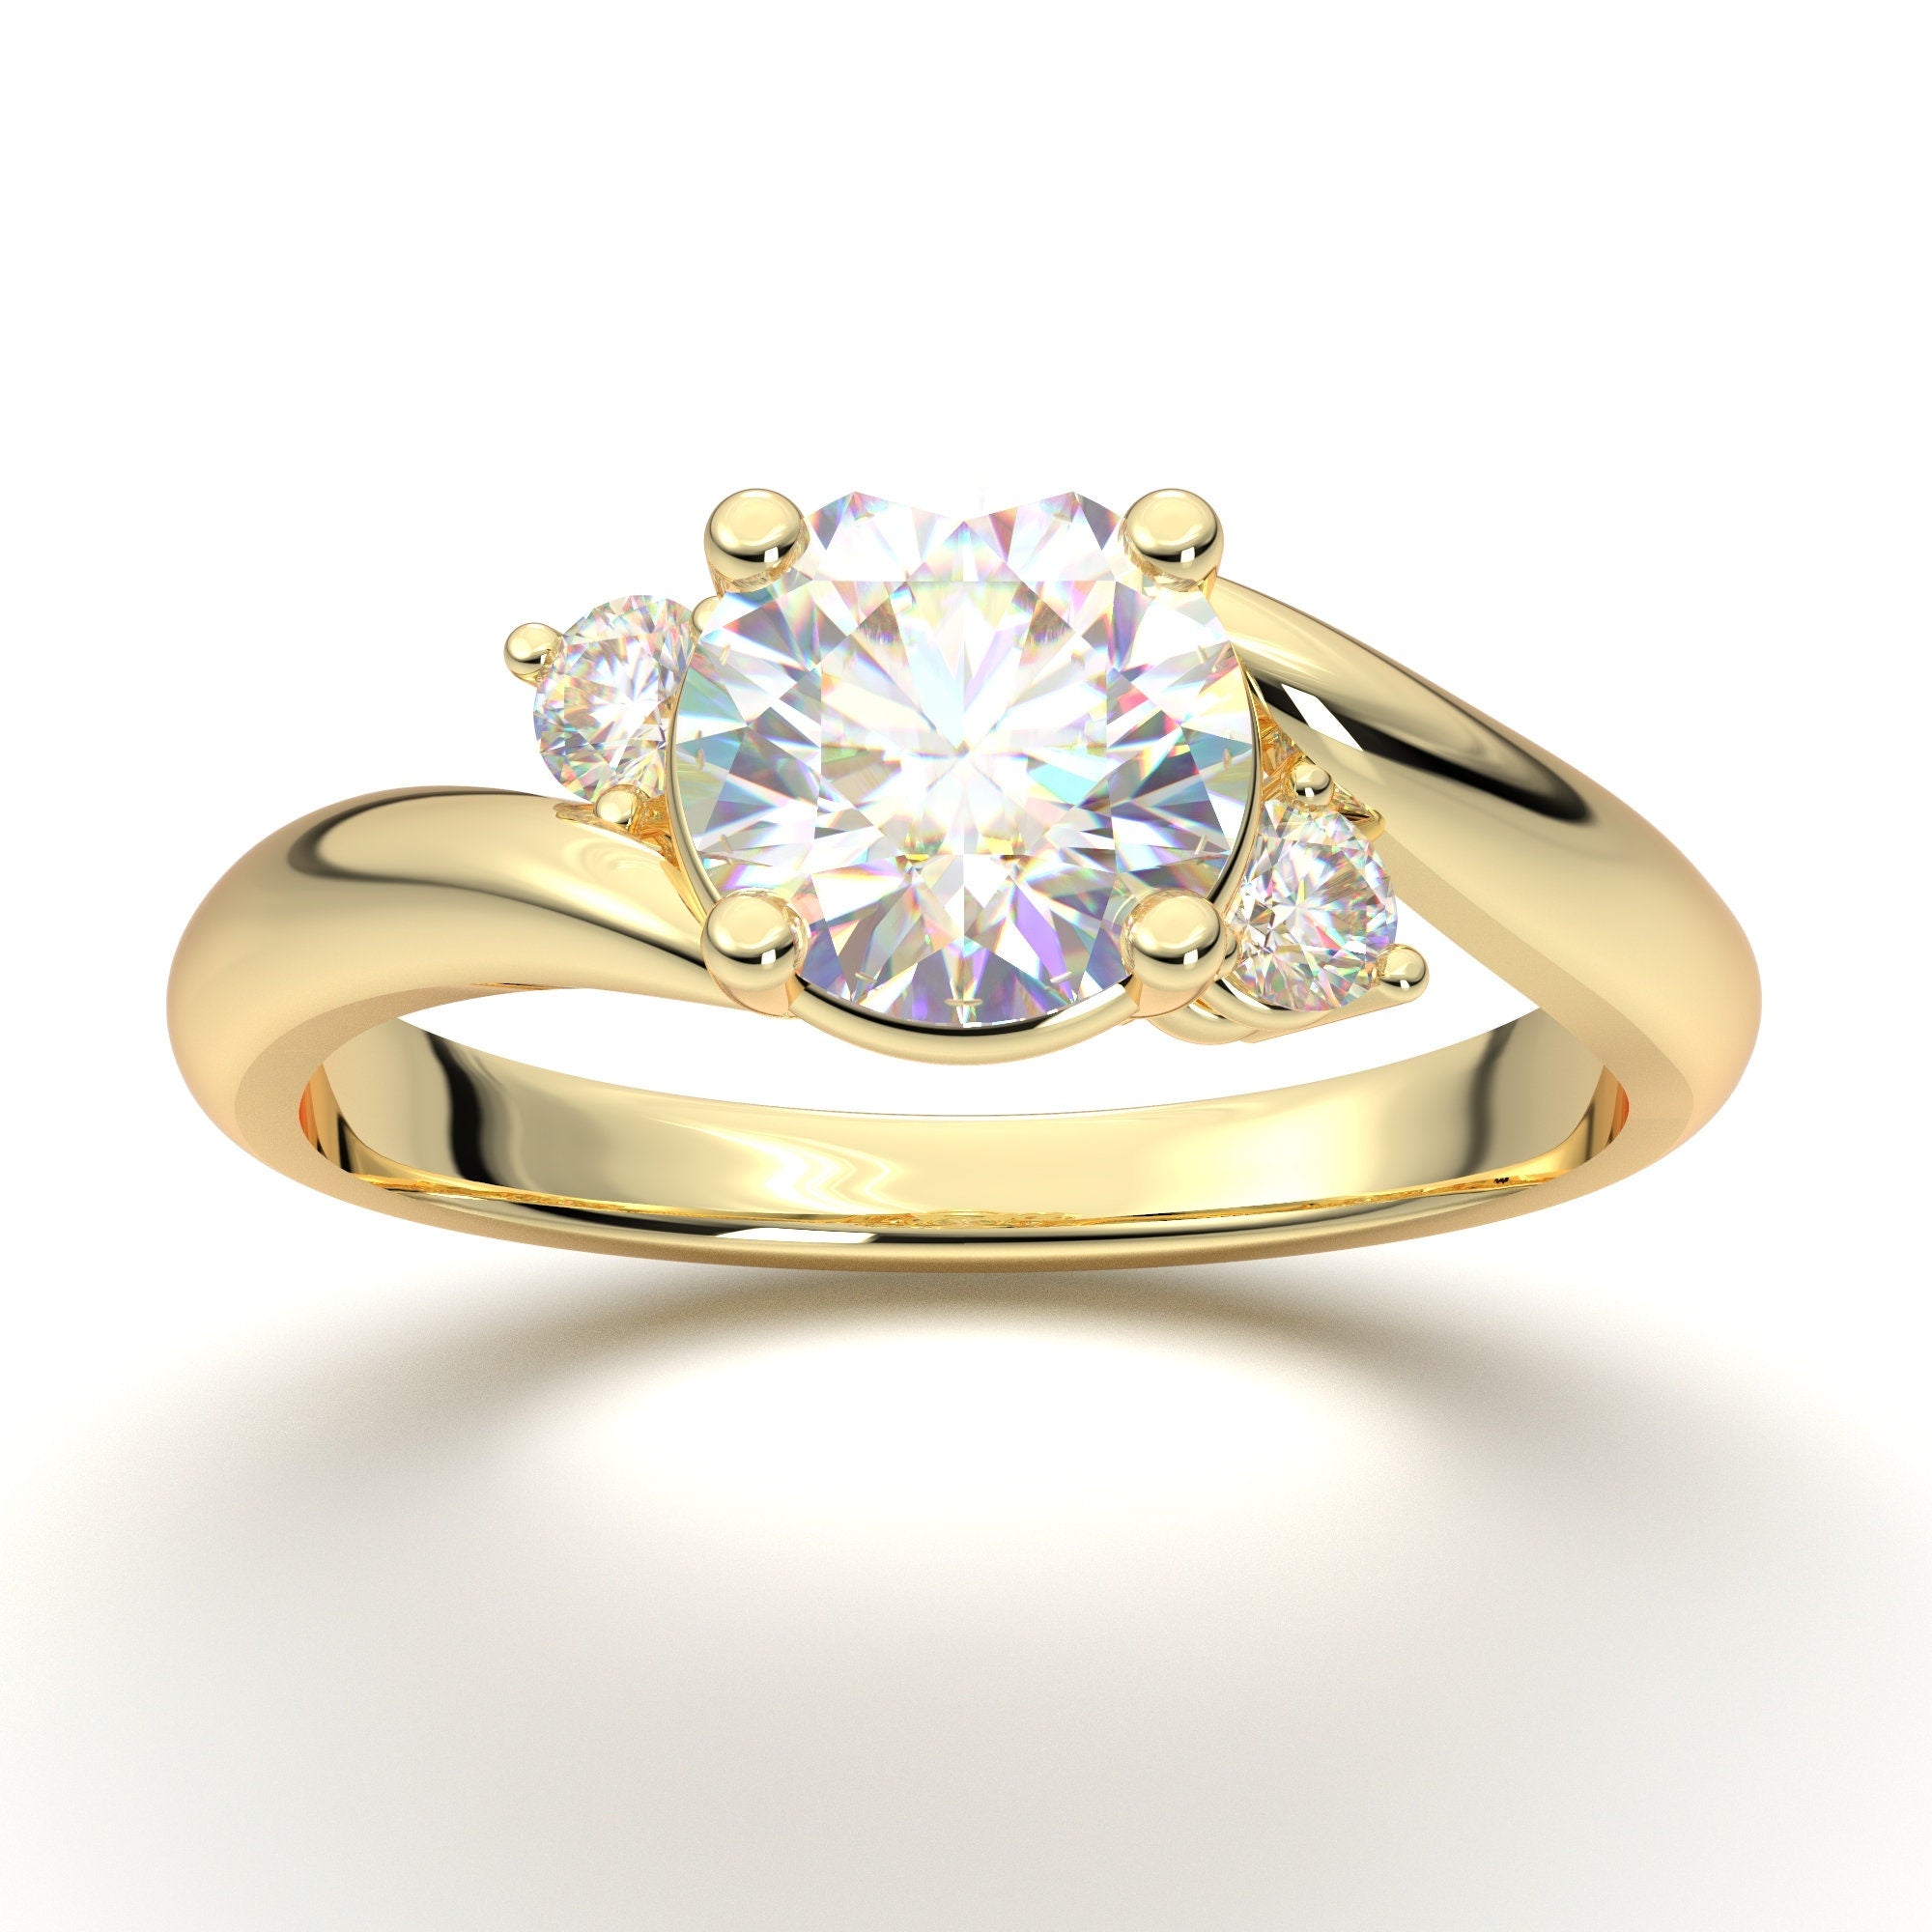 14k gold plated round sim diamond cross design womens solitaire wedding ring  - Lilu Jewels - 2413308